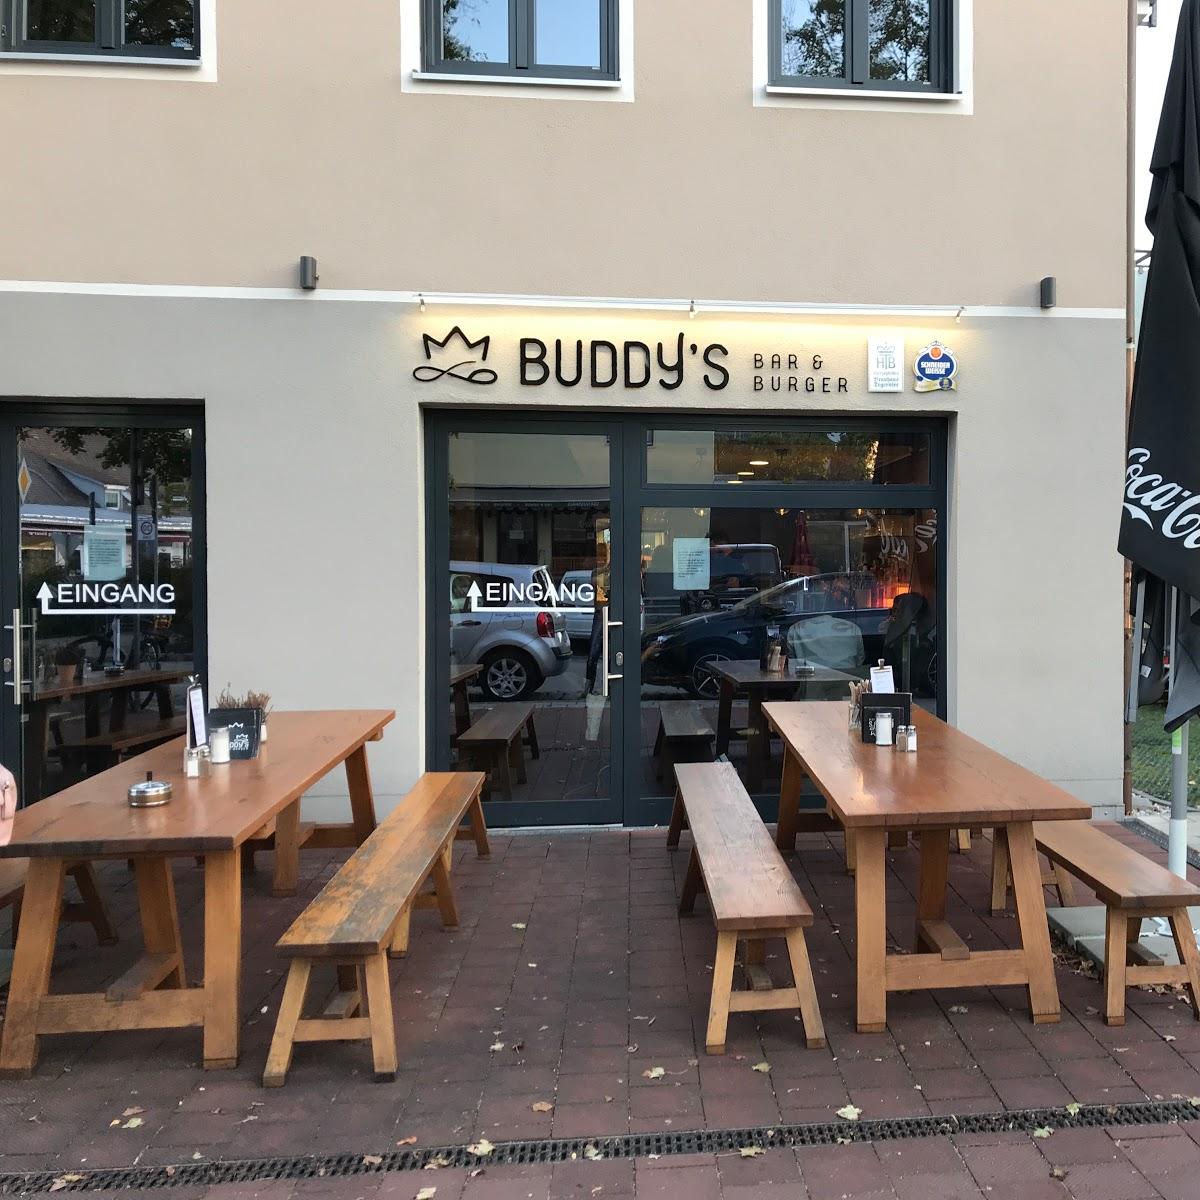 Restaurant "Buddy